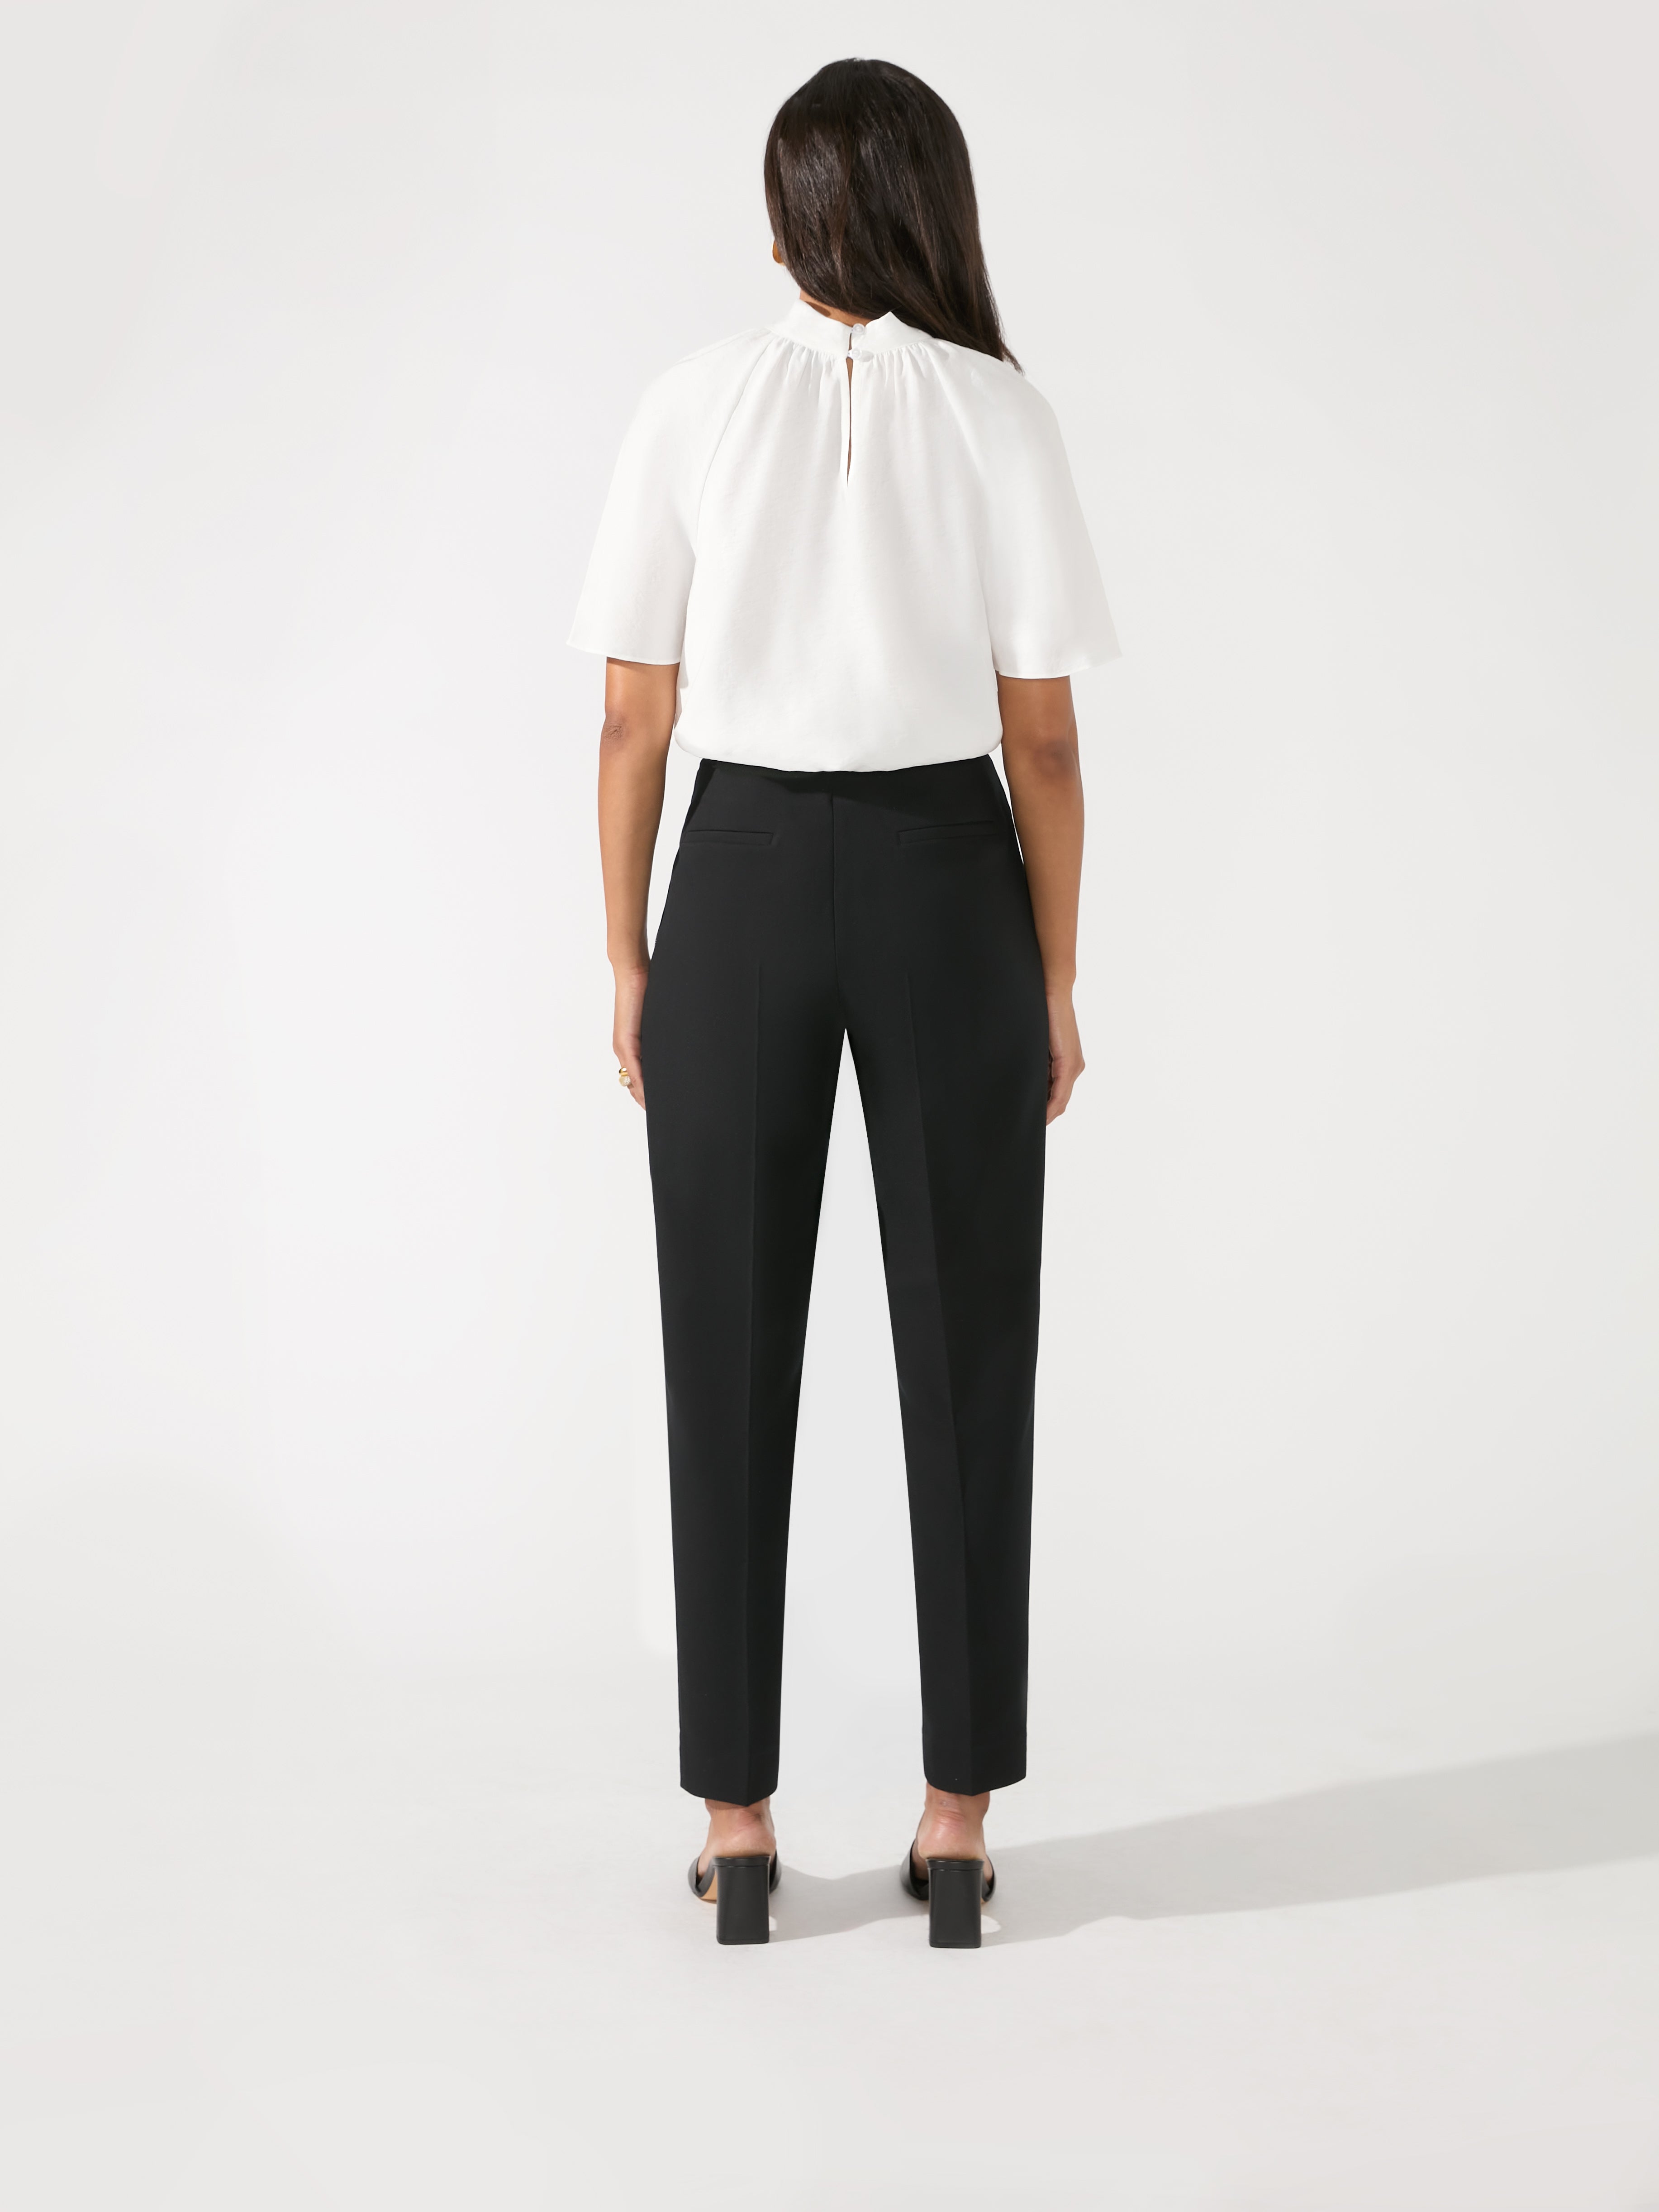 Buy KOTTY Women Solid Polyester Blend Jade Black Trouser (Jade Black,26) at  Amazon.in